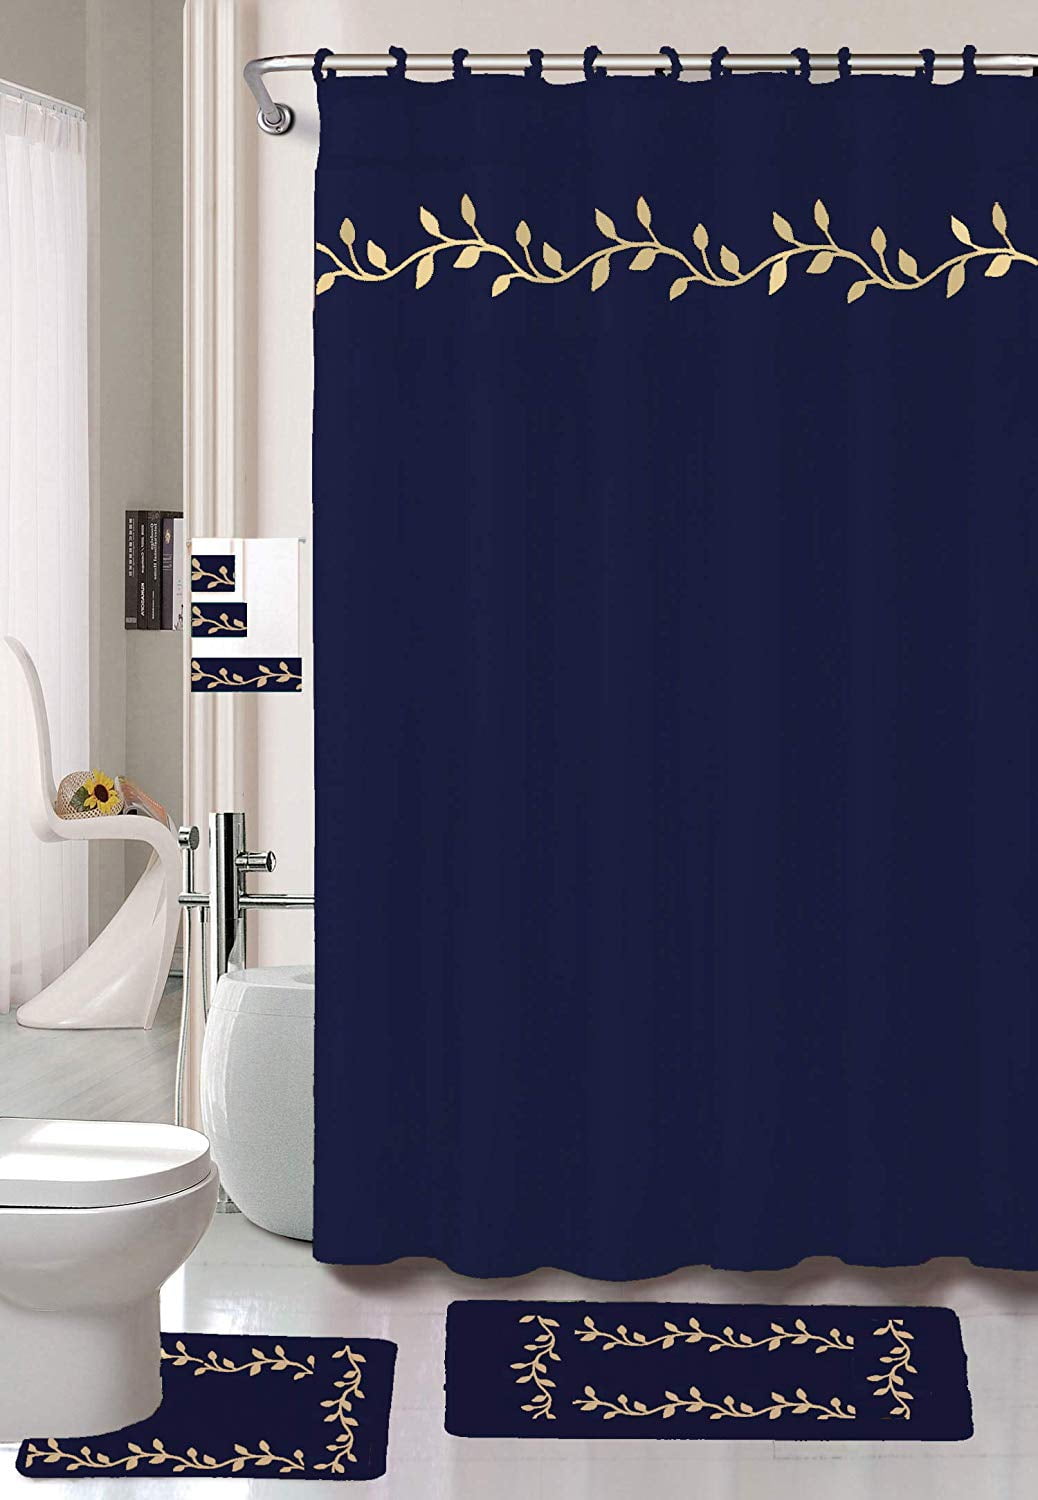 Purple and Turquoise Quartz Stone Bathroom Waterproof Fabric Shower Curtain Set 